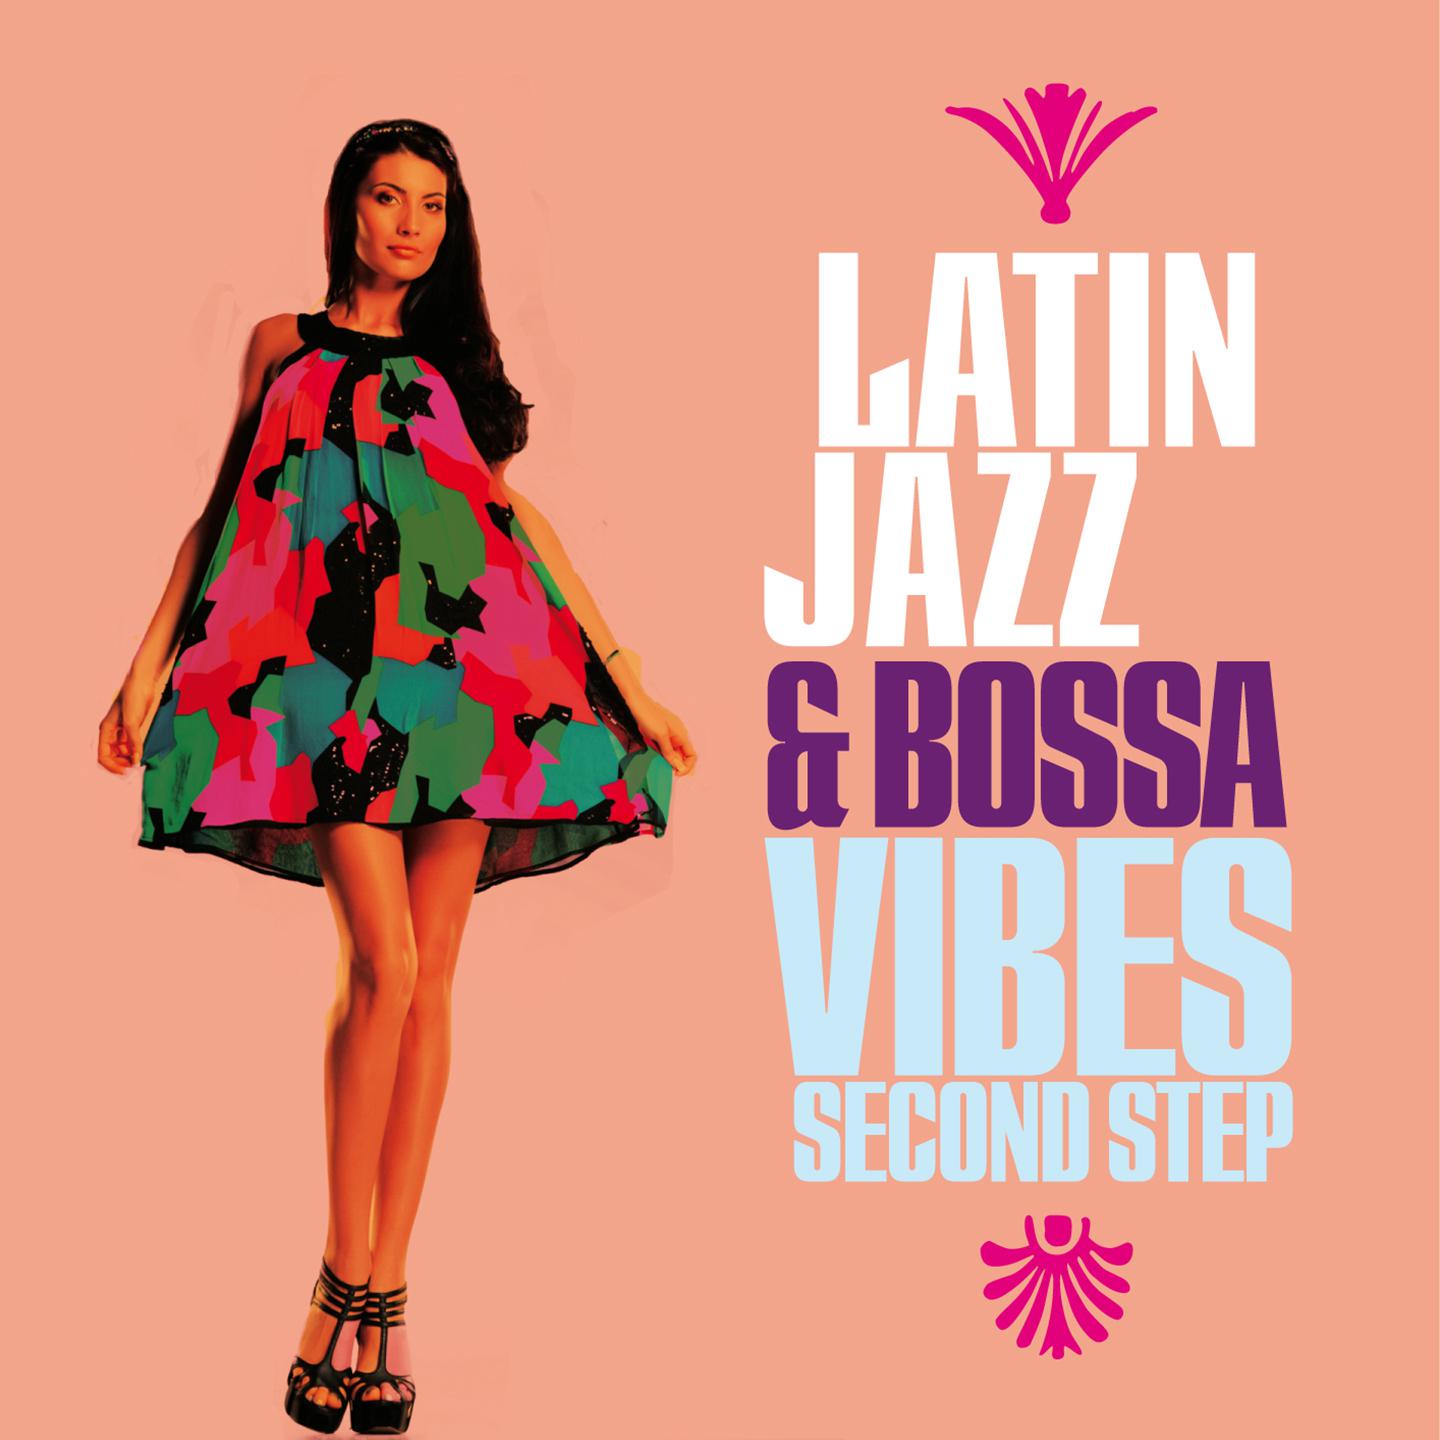 Latin Jazz & Bossa Vibes Second Step